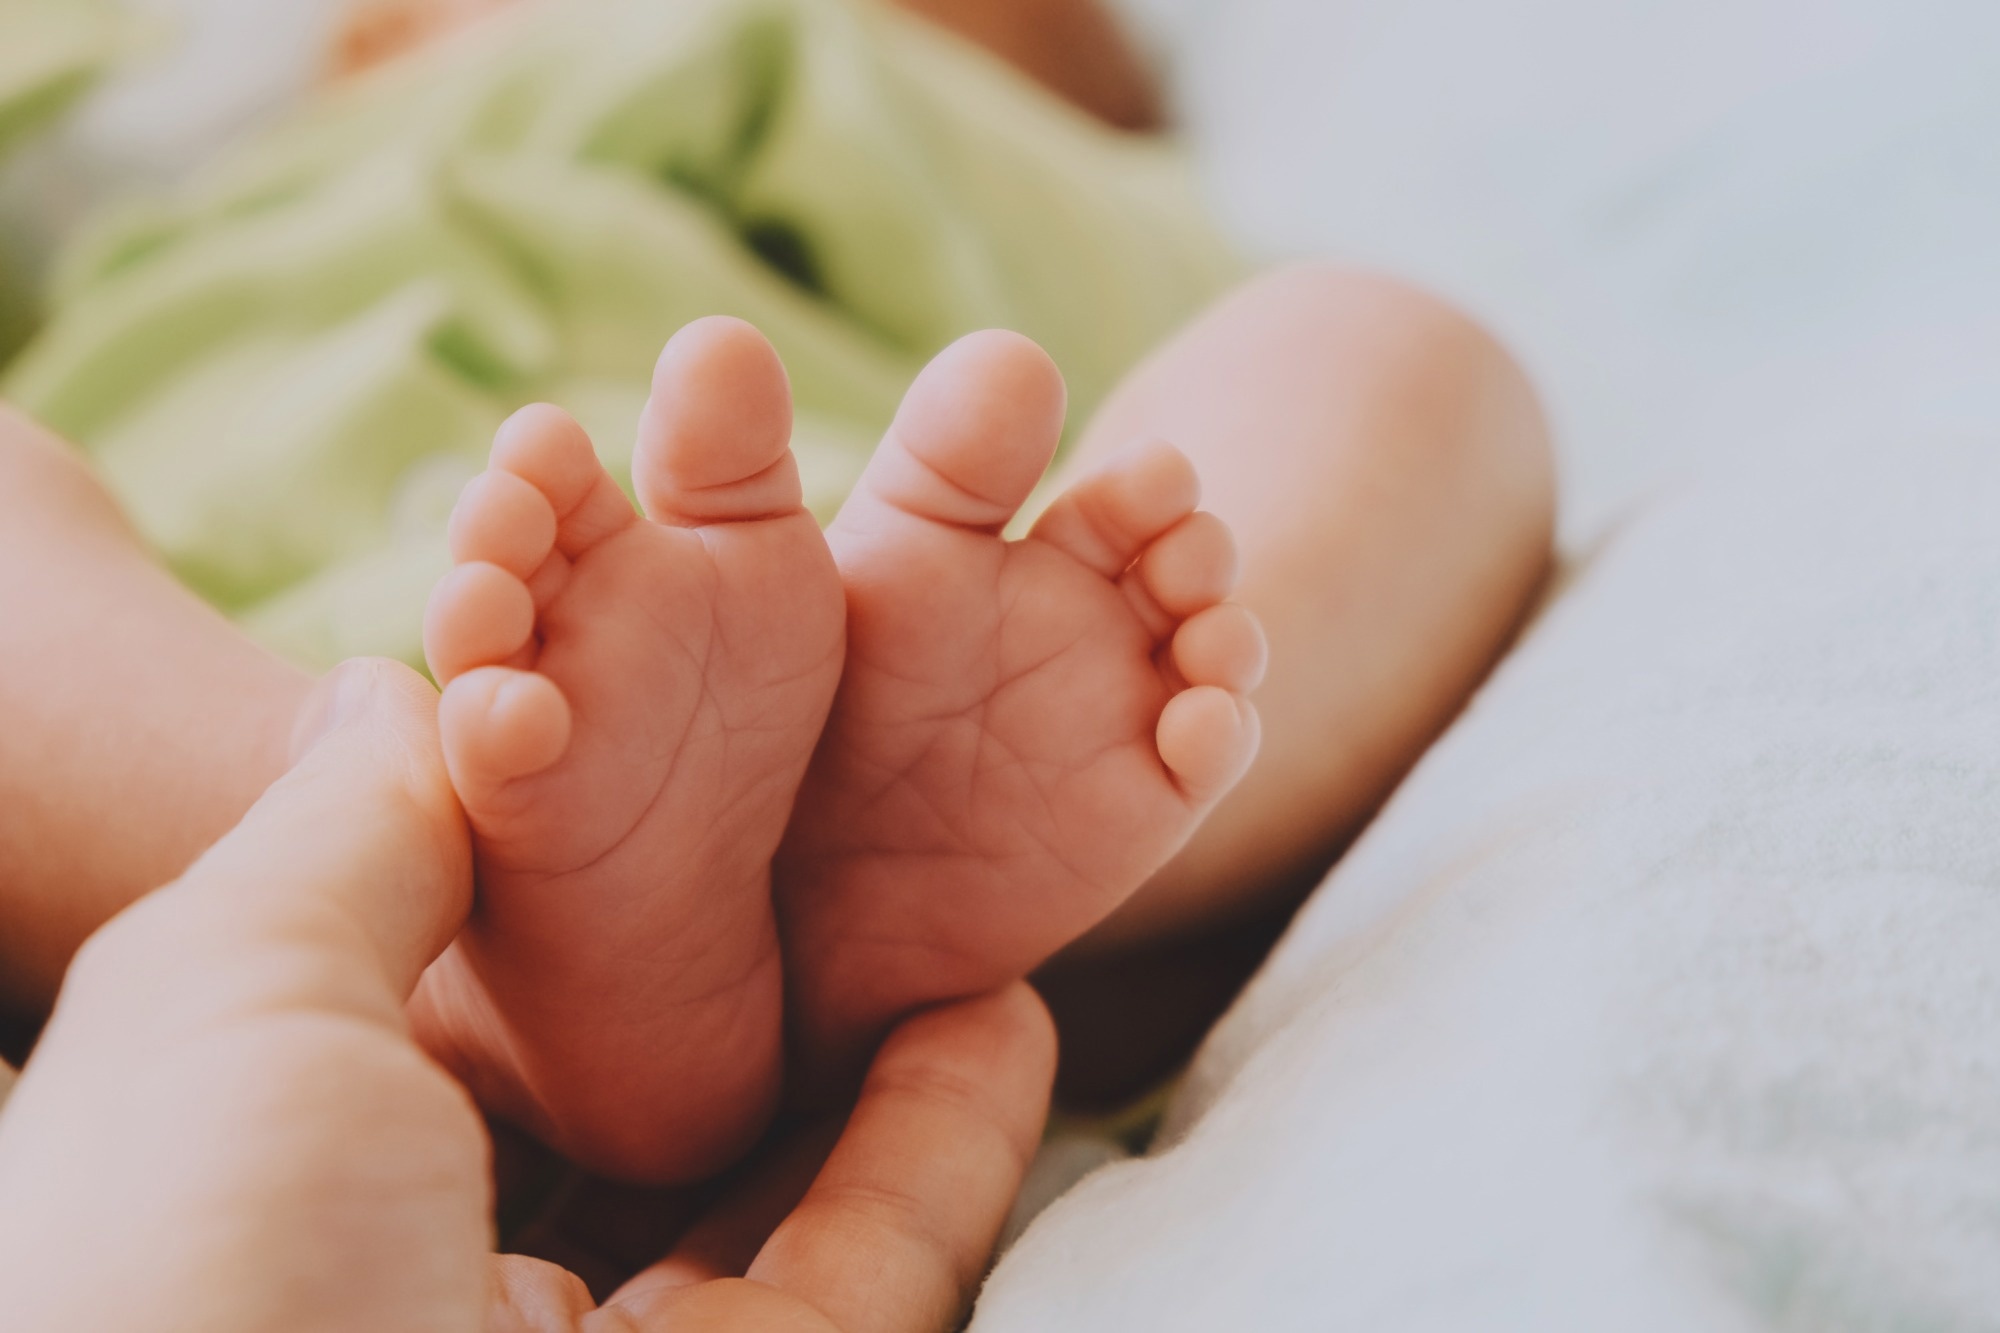 chasing lifetime risk factors in prenatal and early postnatal life